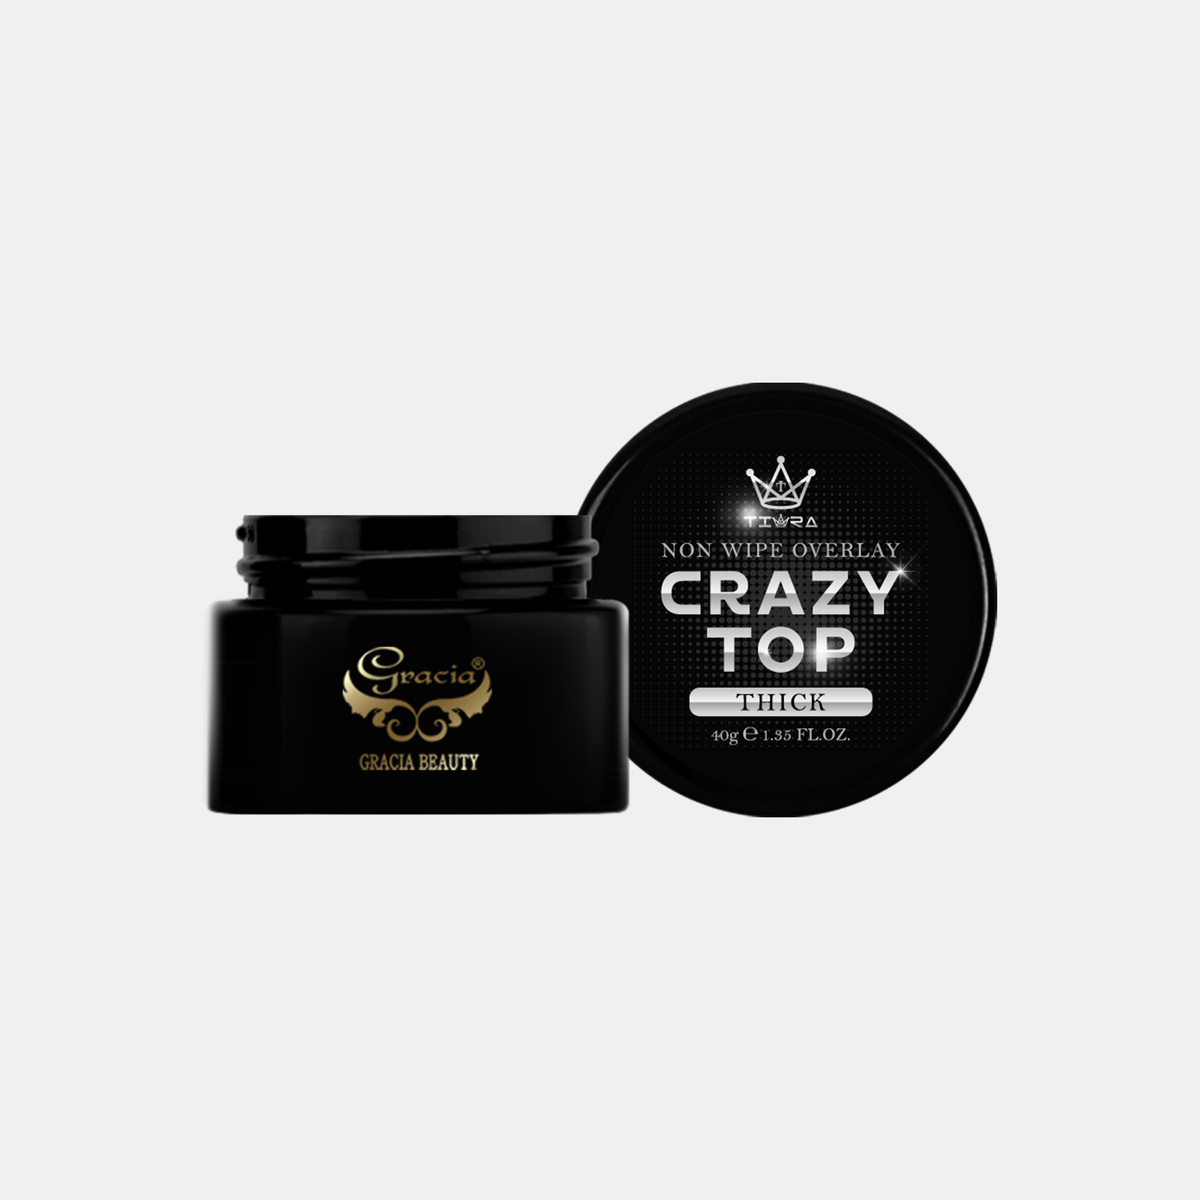 GRACIA Tiara Crazy Top Gel Overlay 40g, Beauty & Personal Care